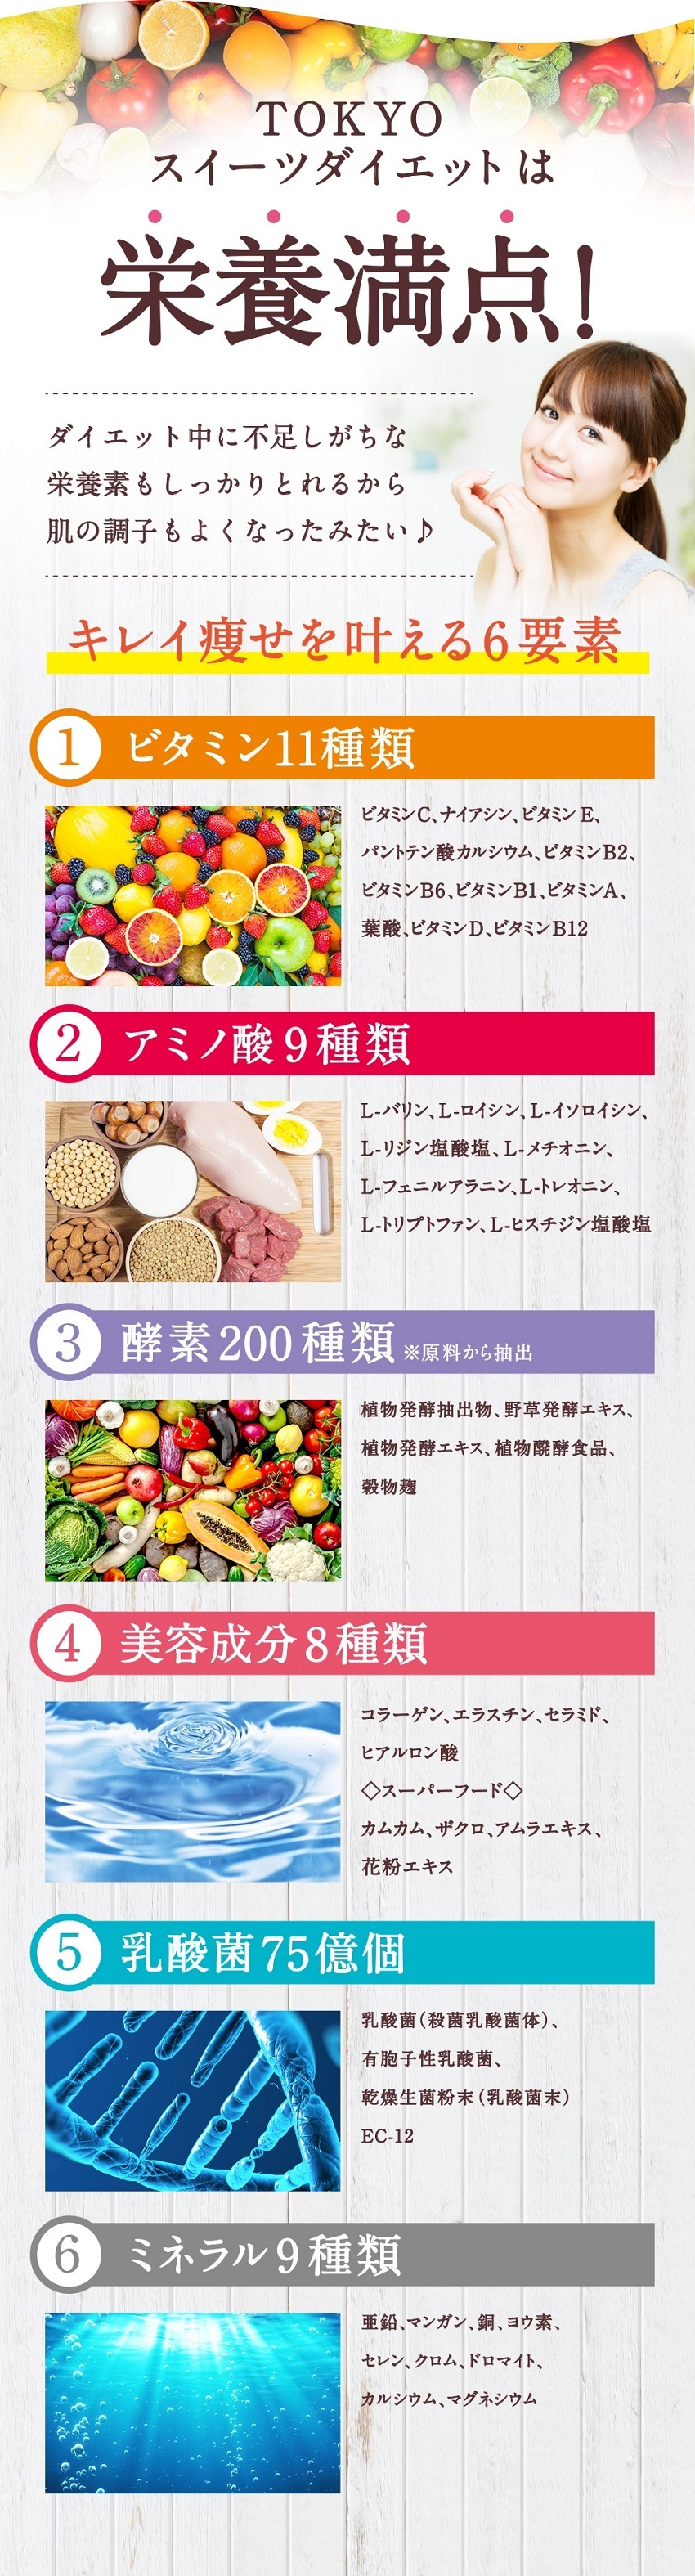 TOKYO Sweets Diet